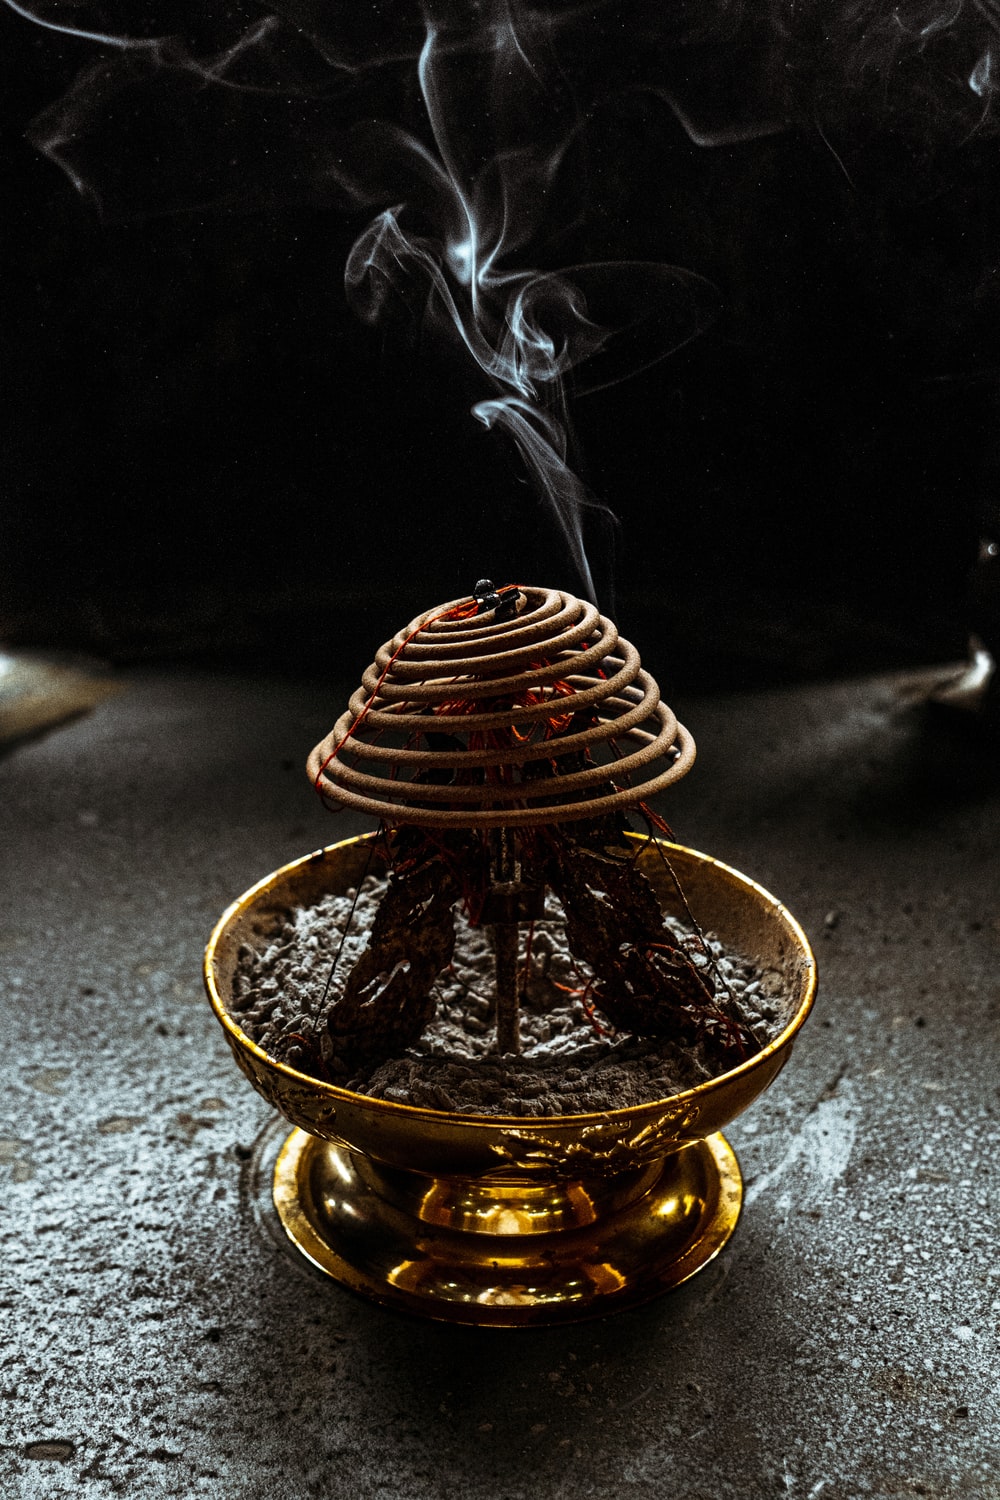 Incense Burner Picture. Download Free Image